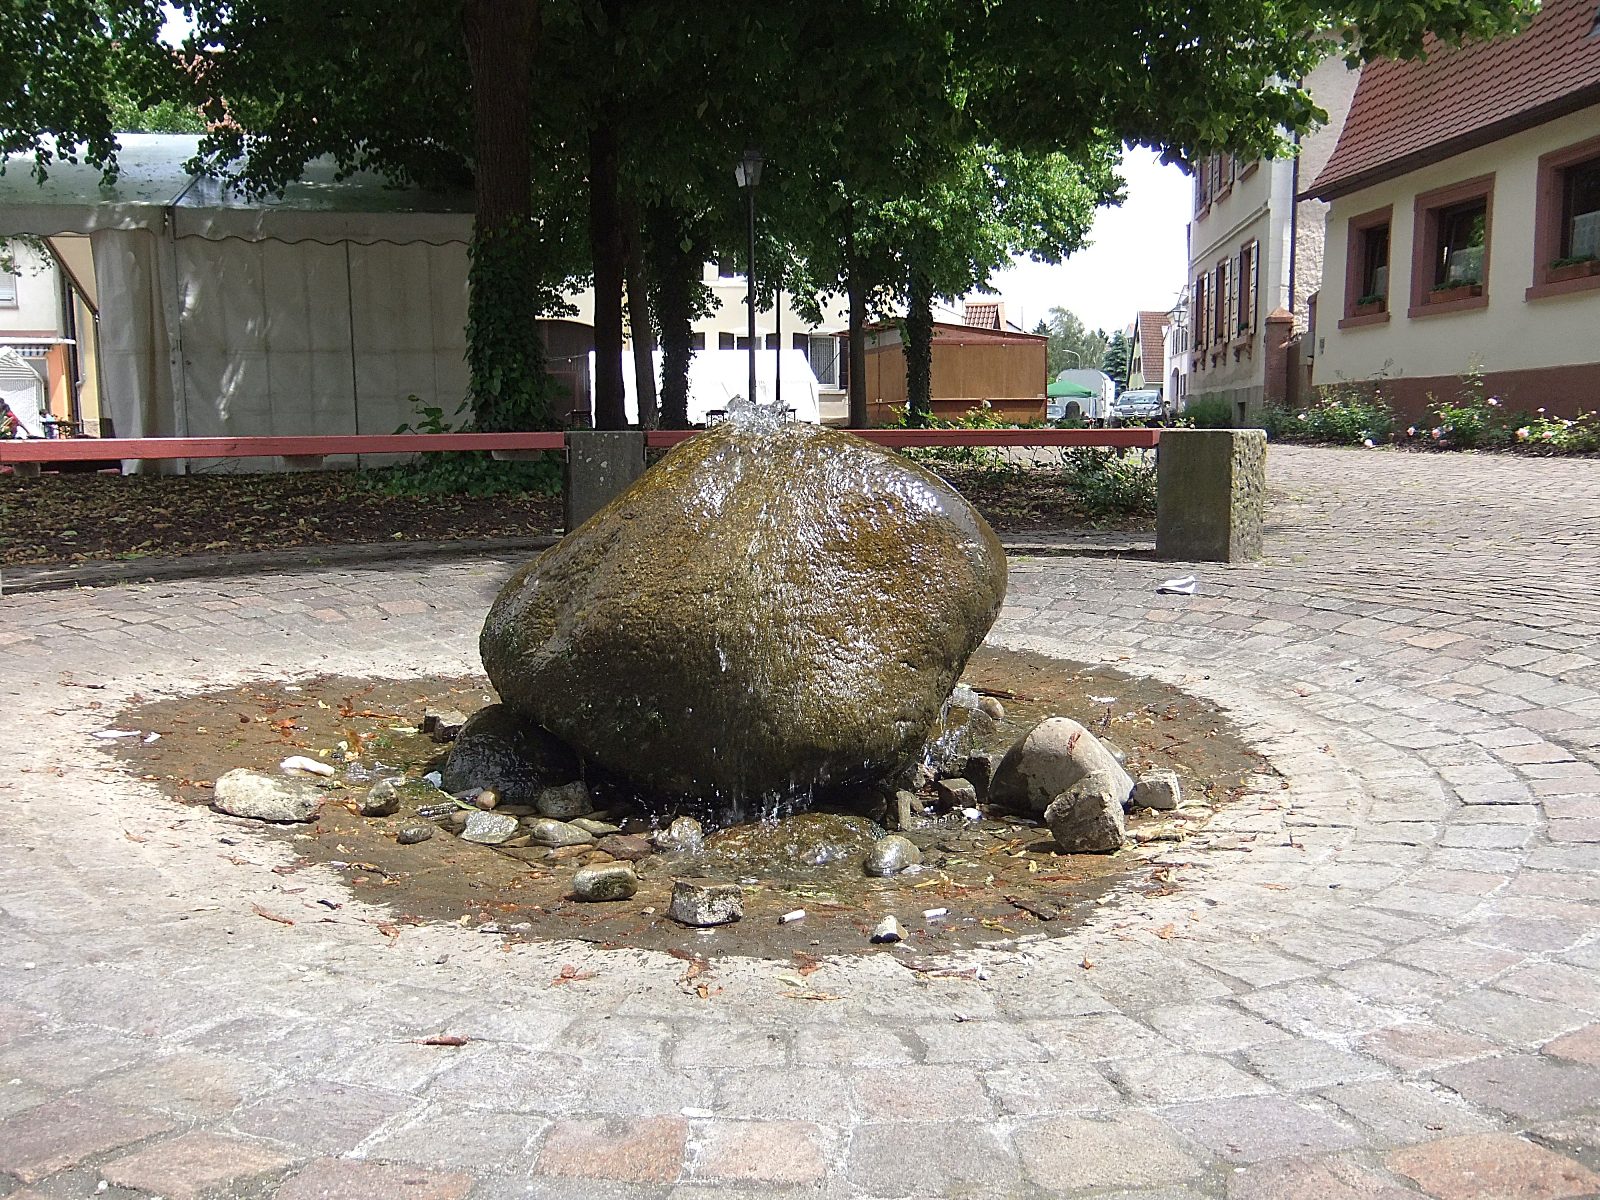 Datei:Brunnen Schwegenheim.JPG